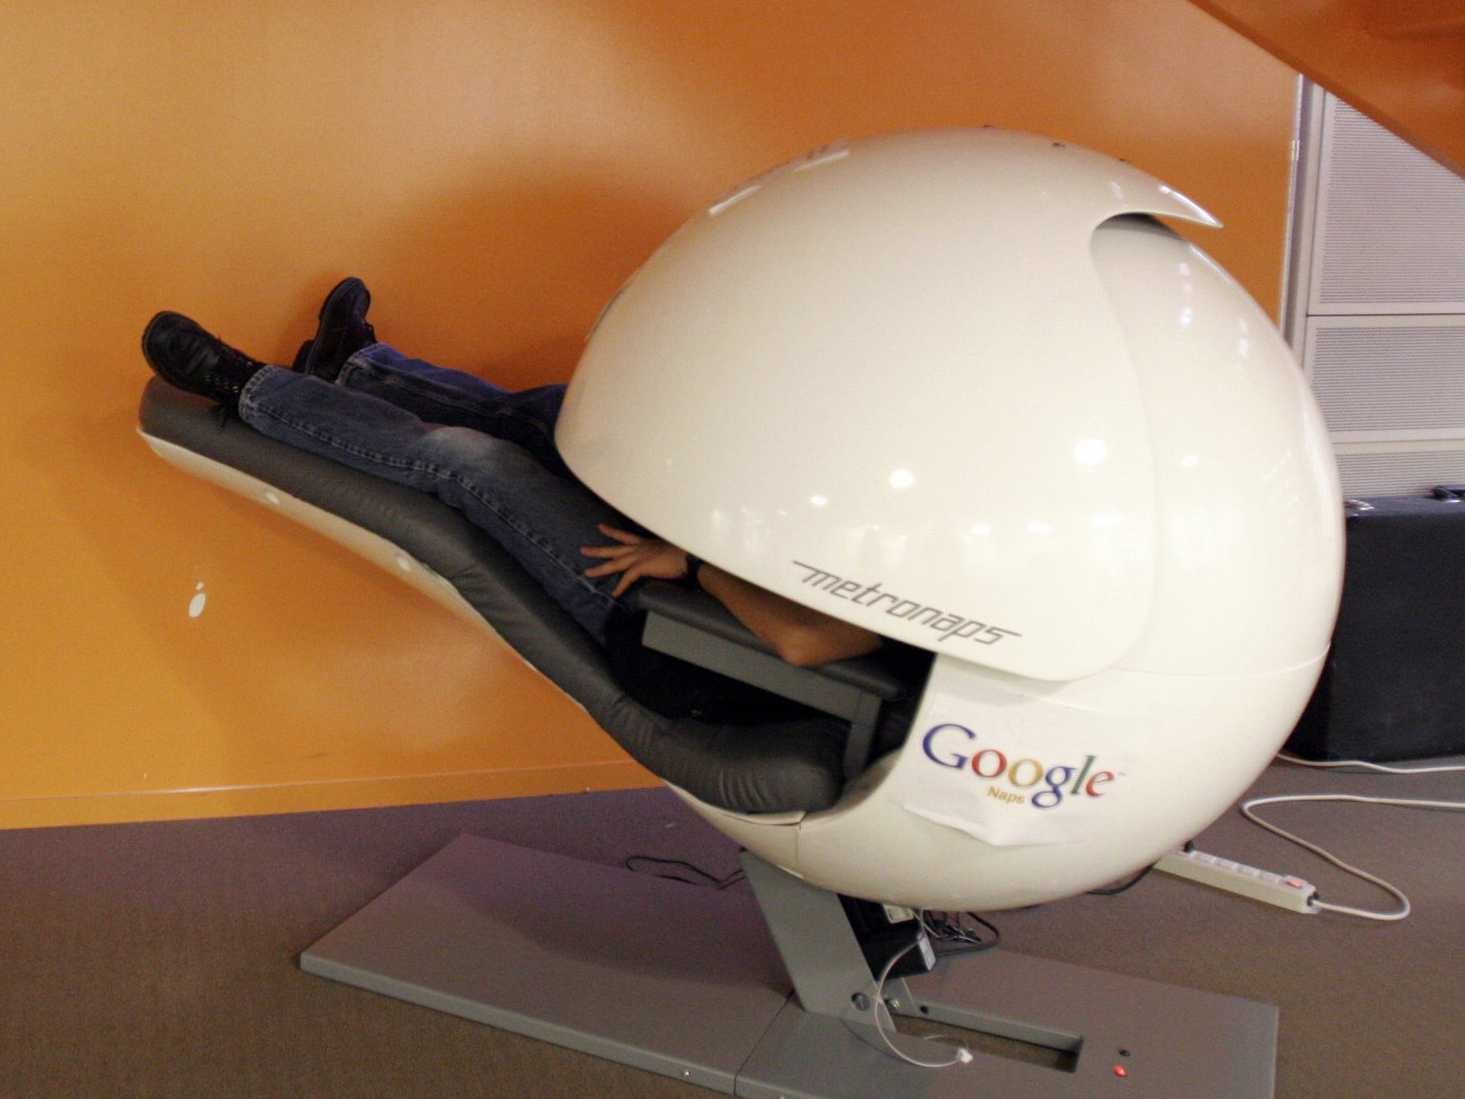 A Google sleep pod